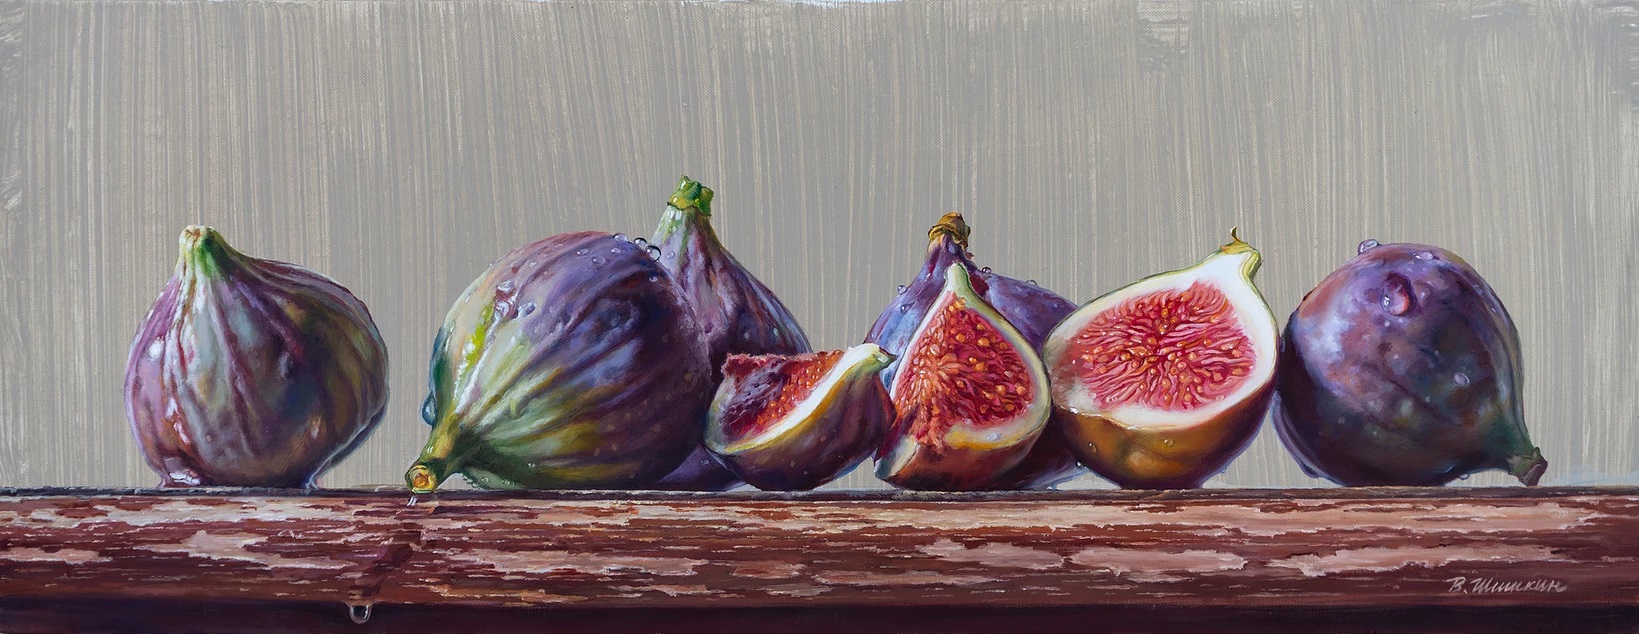 Figs - 1, Valery Shishkin, Buy the painting Oil